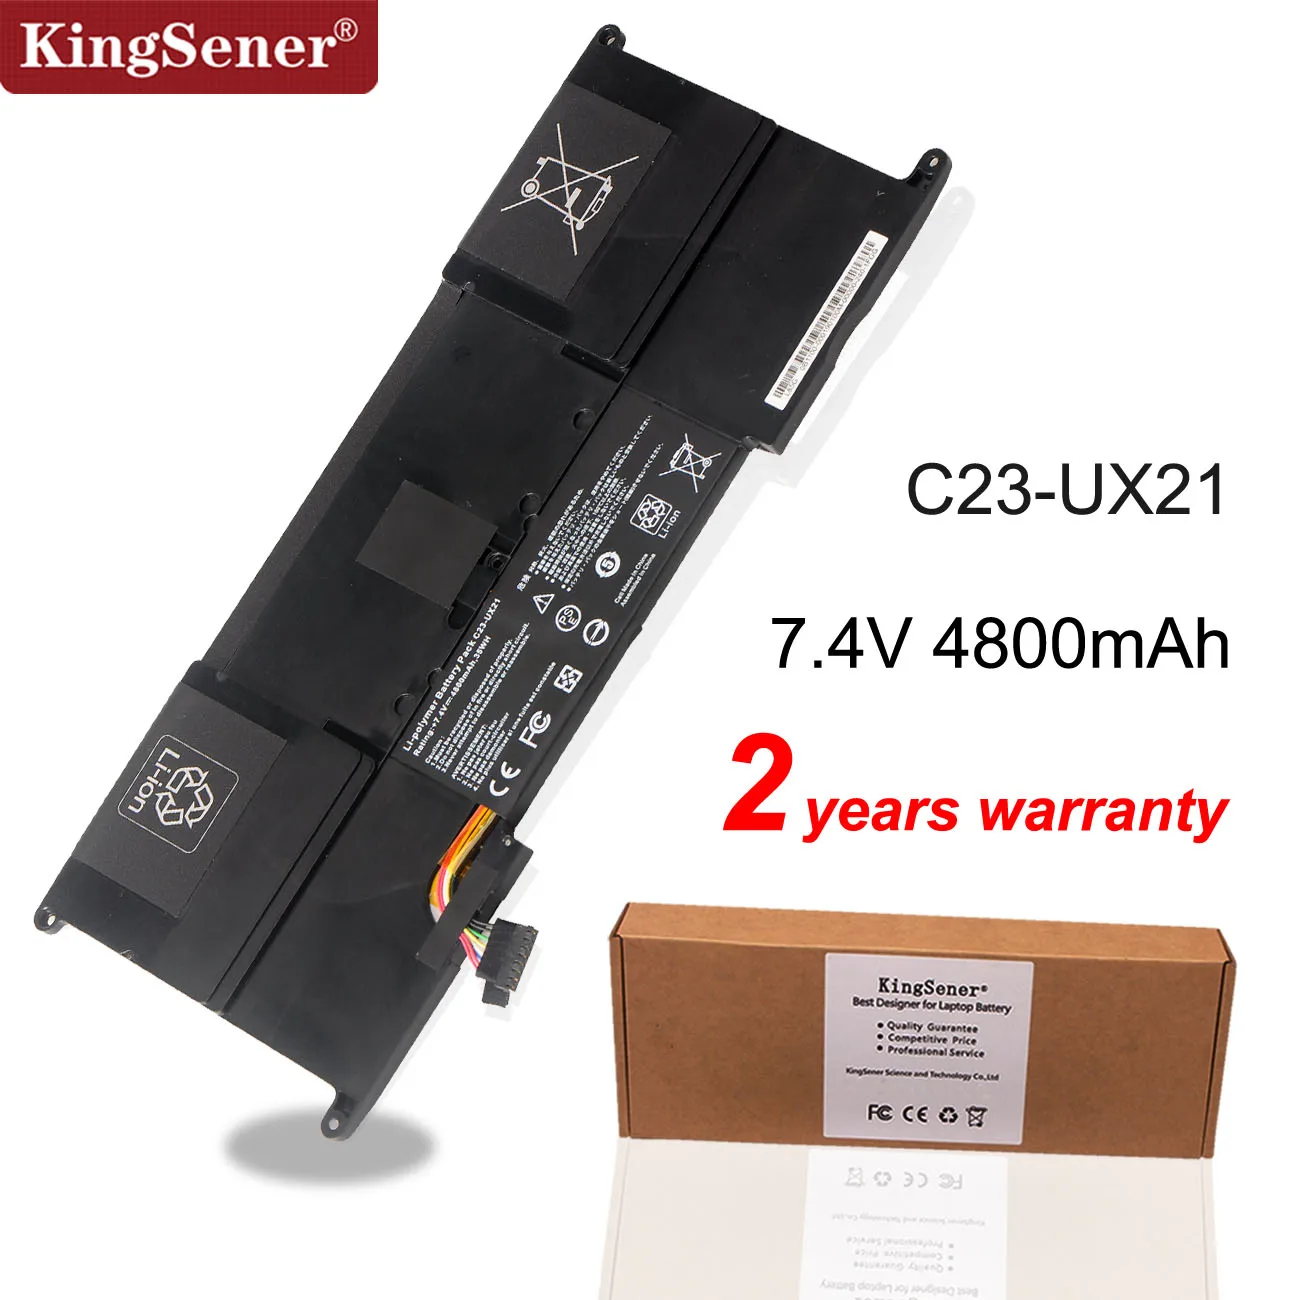 

KingSener C23-UX21 Laptop Battery for ASUS Zenbook UX21 UX21A UX21E Ultrabook Series 7.4V 4800mAh Free 24 months Warranty